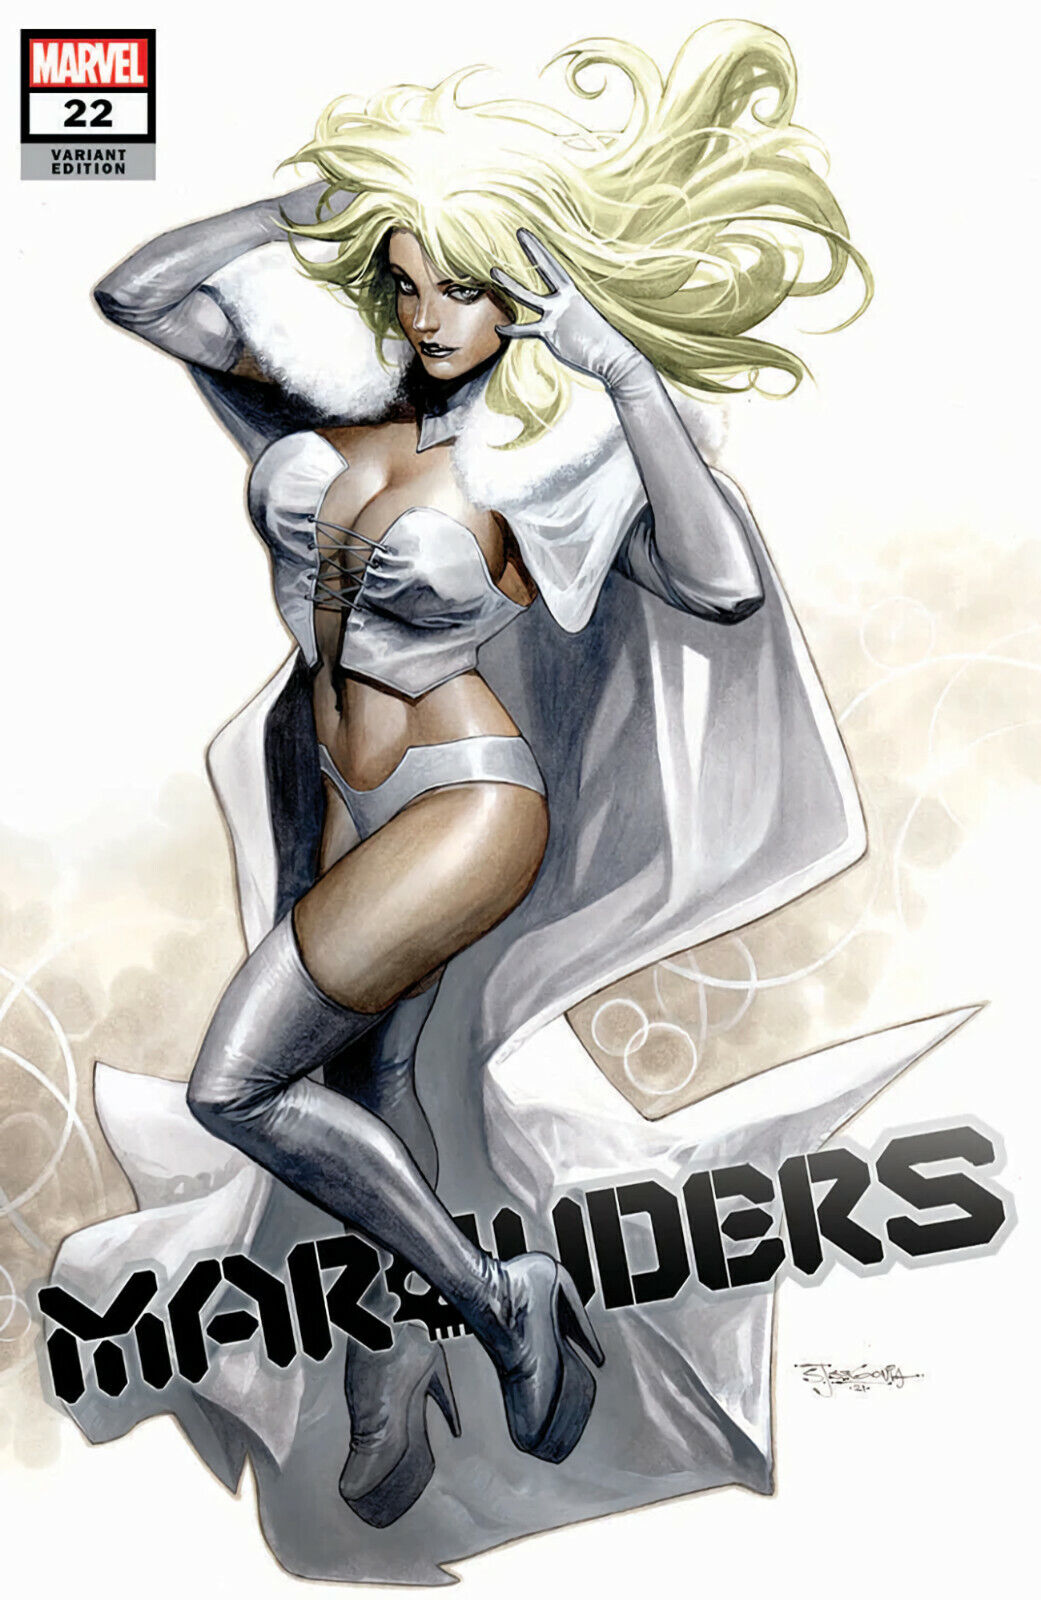 MARAUDERS #22 (STEPHEN SEGOVIA EXCLUSIVE VARIANT) COMIC BOOK ~ Marvel Comics